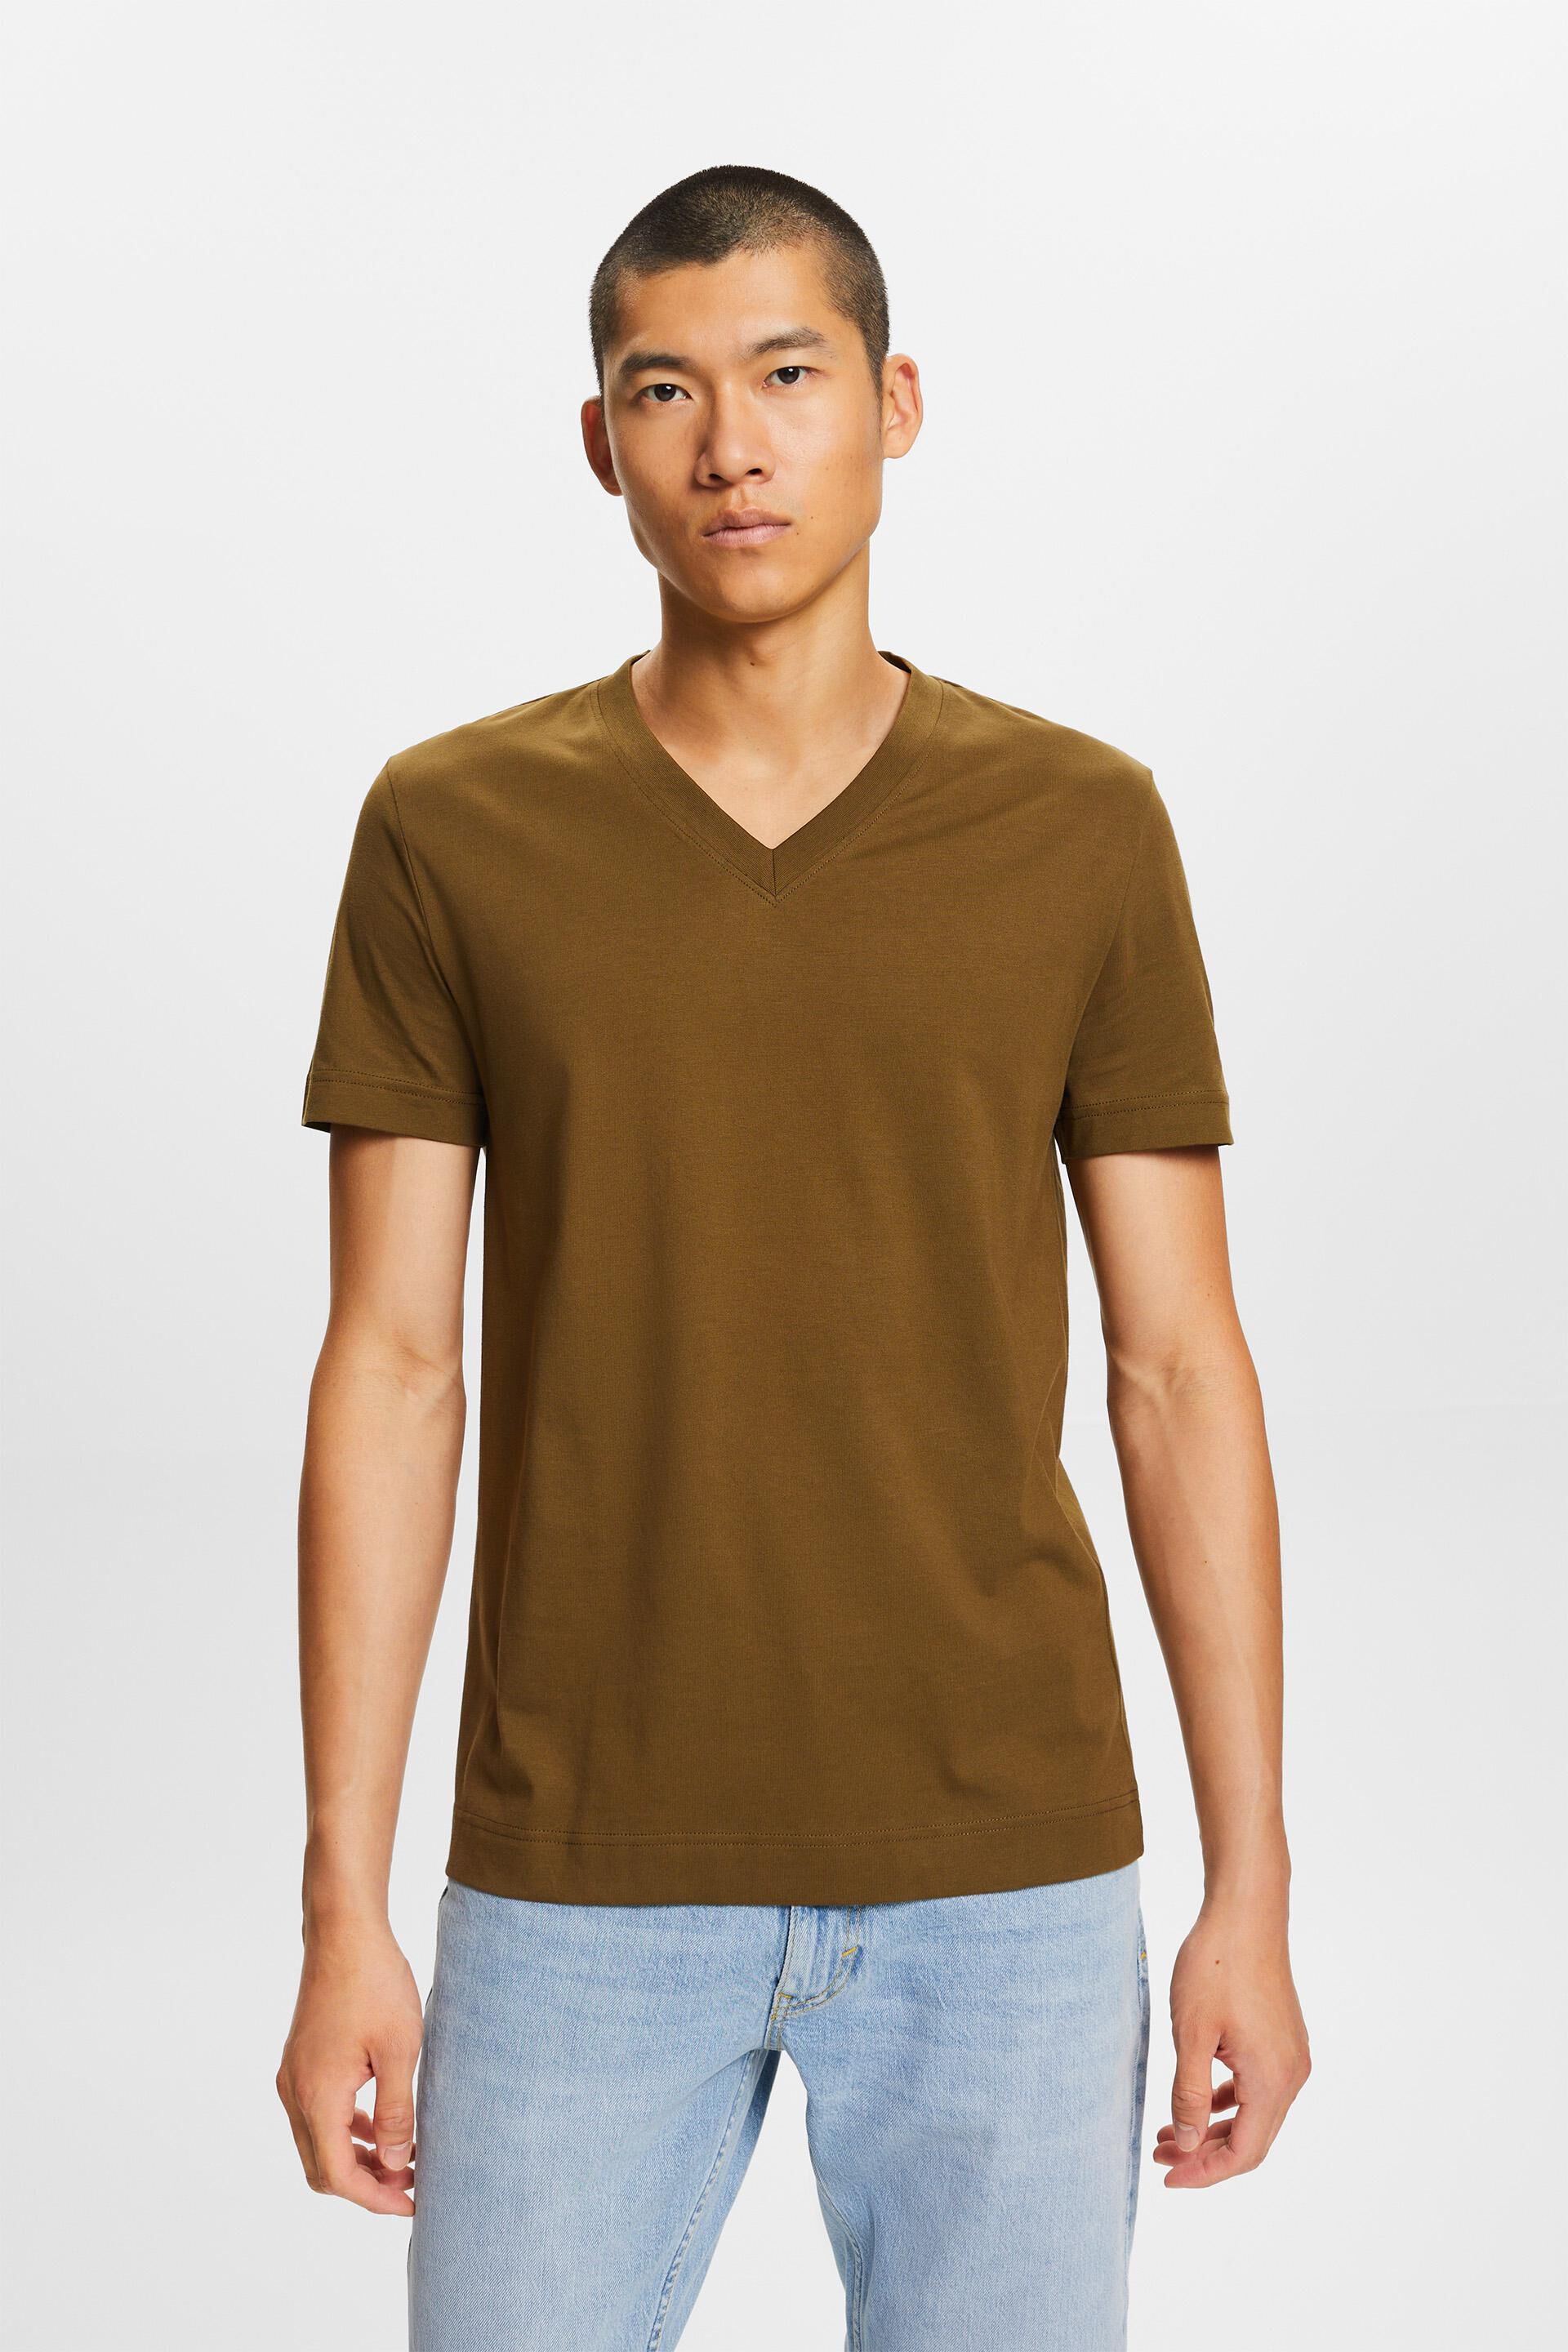 Esprit t-shirt, cotton V-neck 100% Jersey